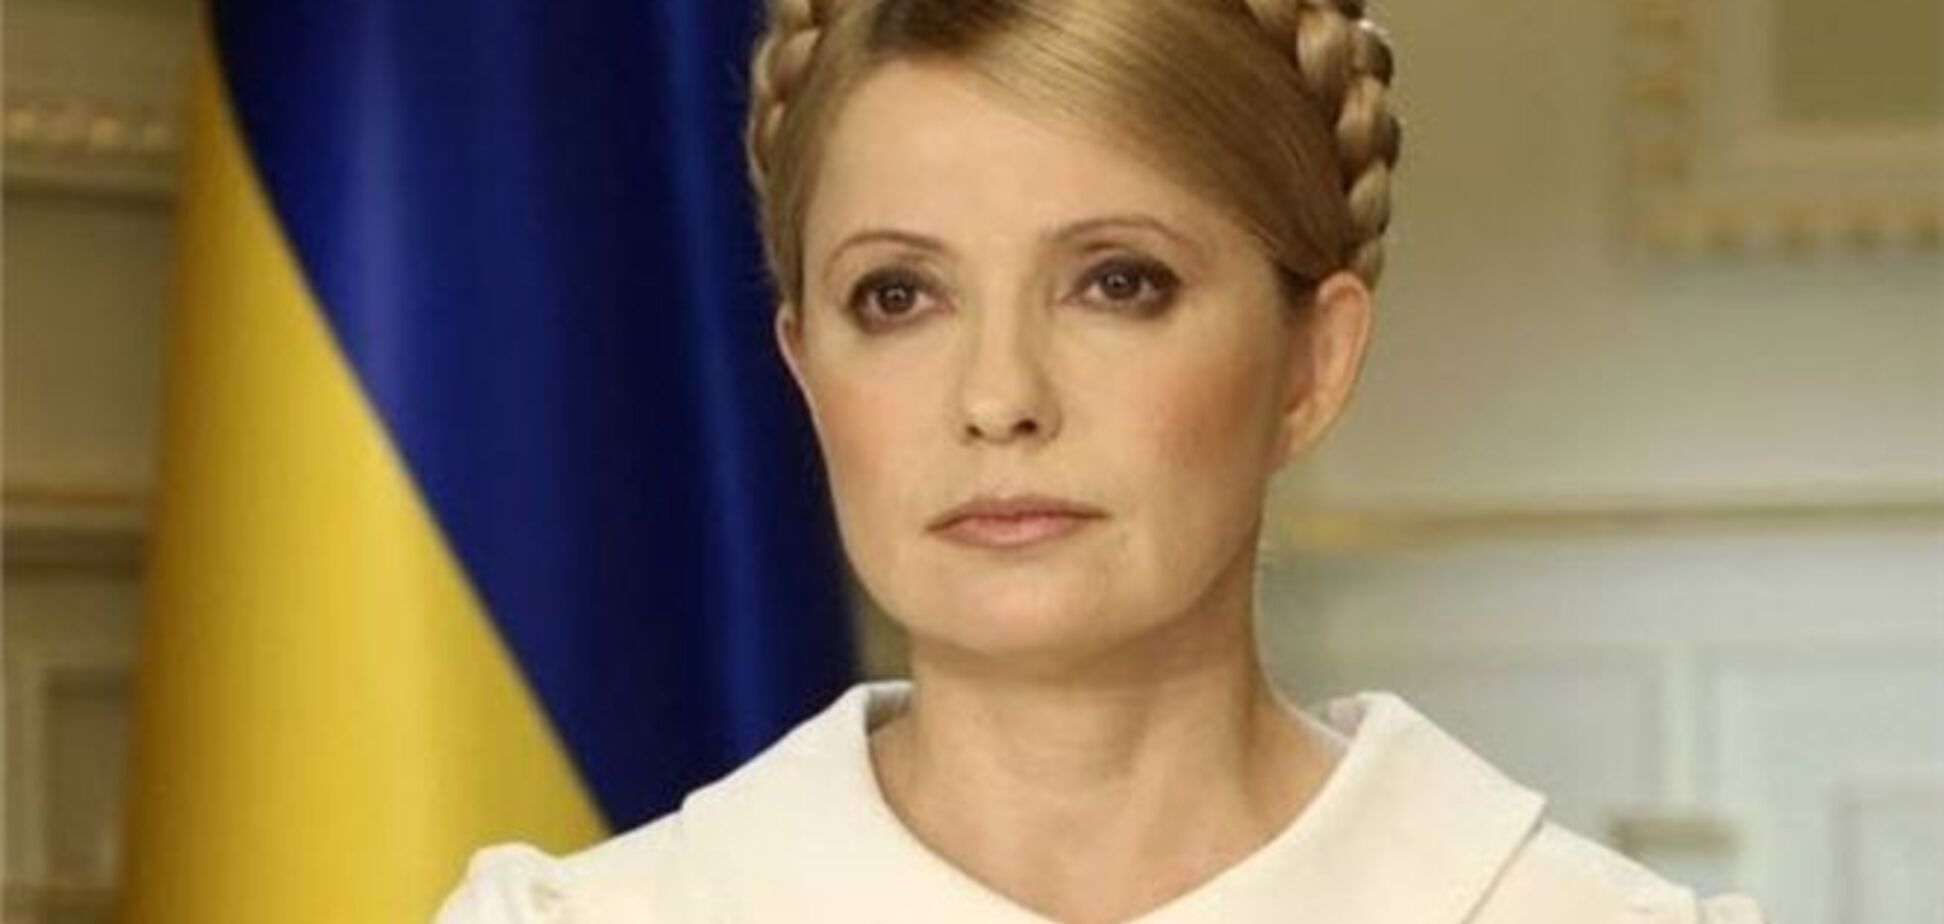 ЕС против лечения Тимошенко за границей, если по возвращению ее снова арестуют